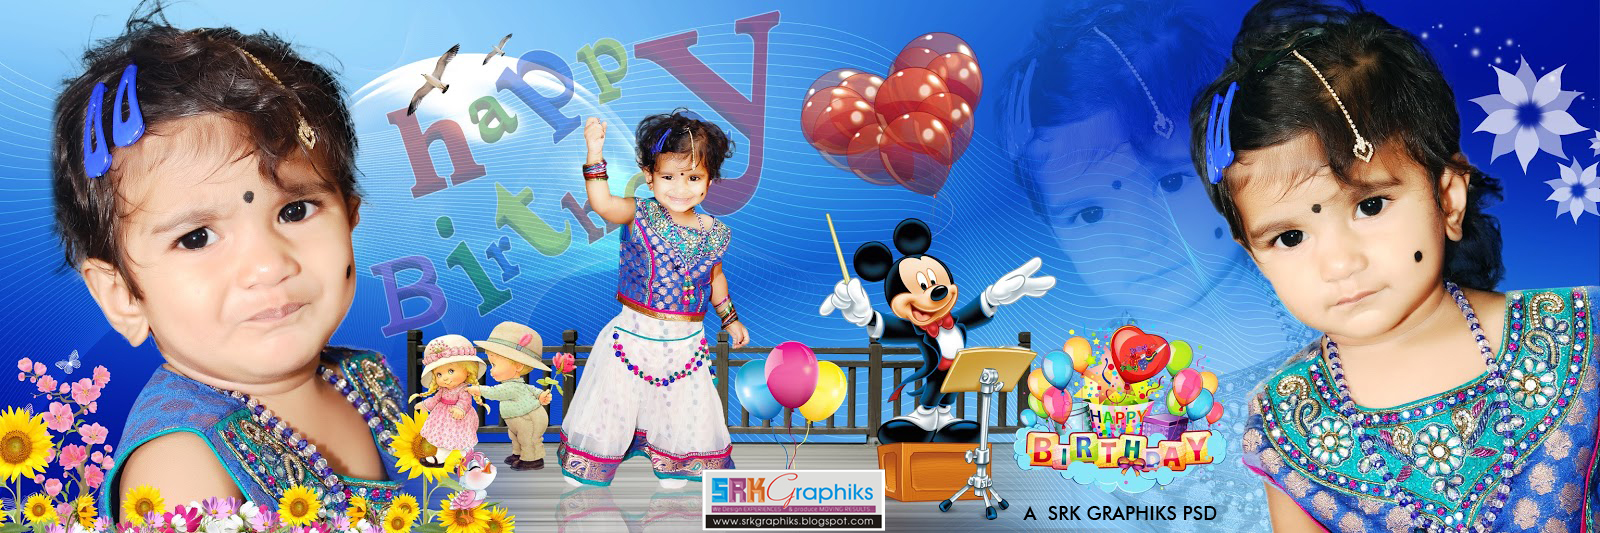 Download karizma album birthday psd 12x36 free download - SRK GRAPHICS